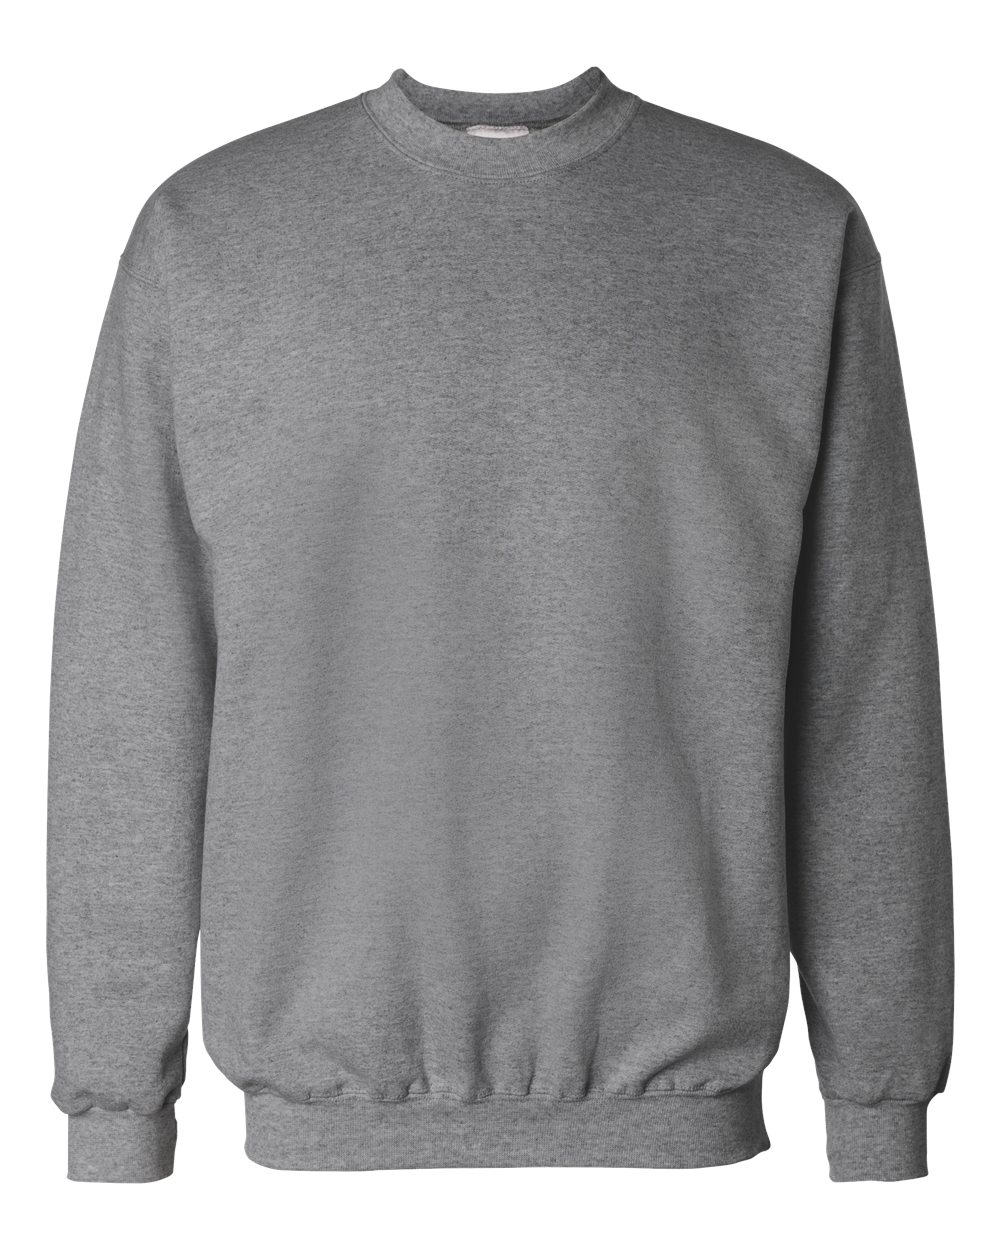 View Item: Hanes - Ultimate Cotton Crewneck Sweatshirt - F260 ...